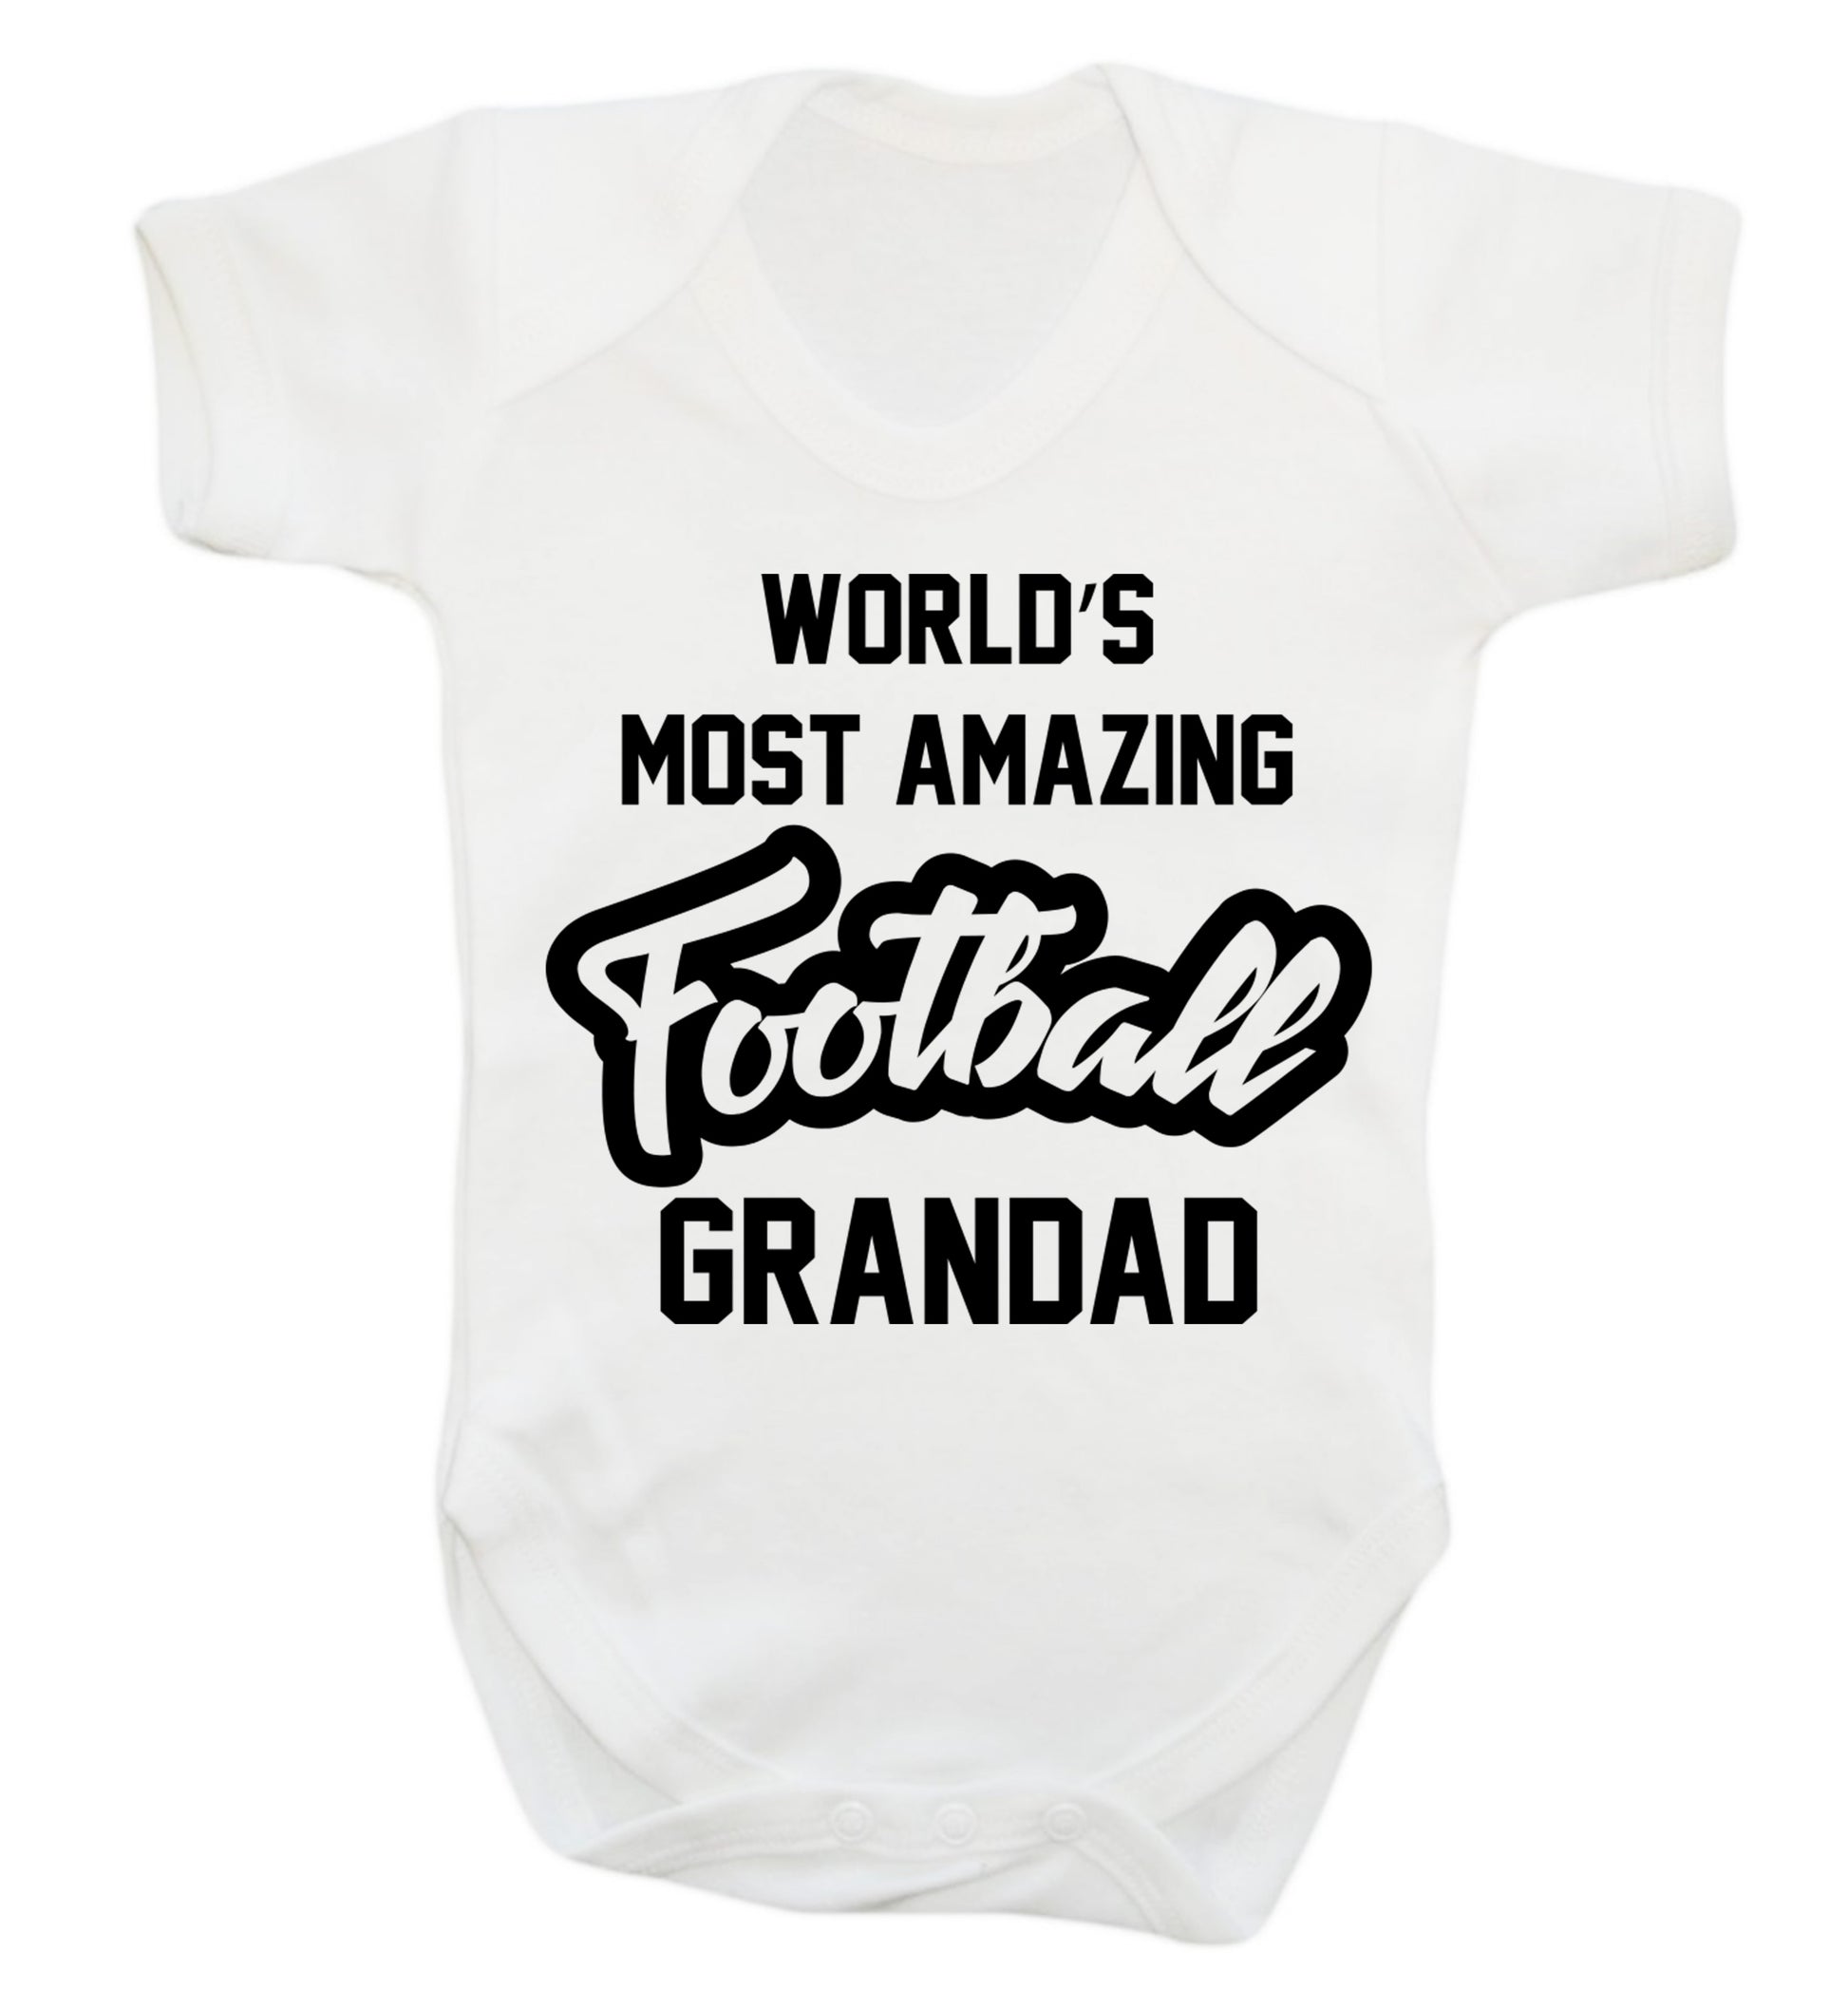 Worlds most amazing football grandad Baby Vest white 18-24 months